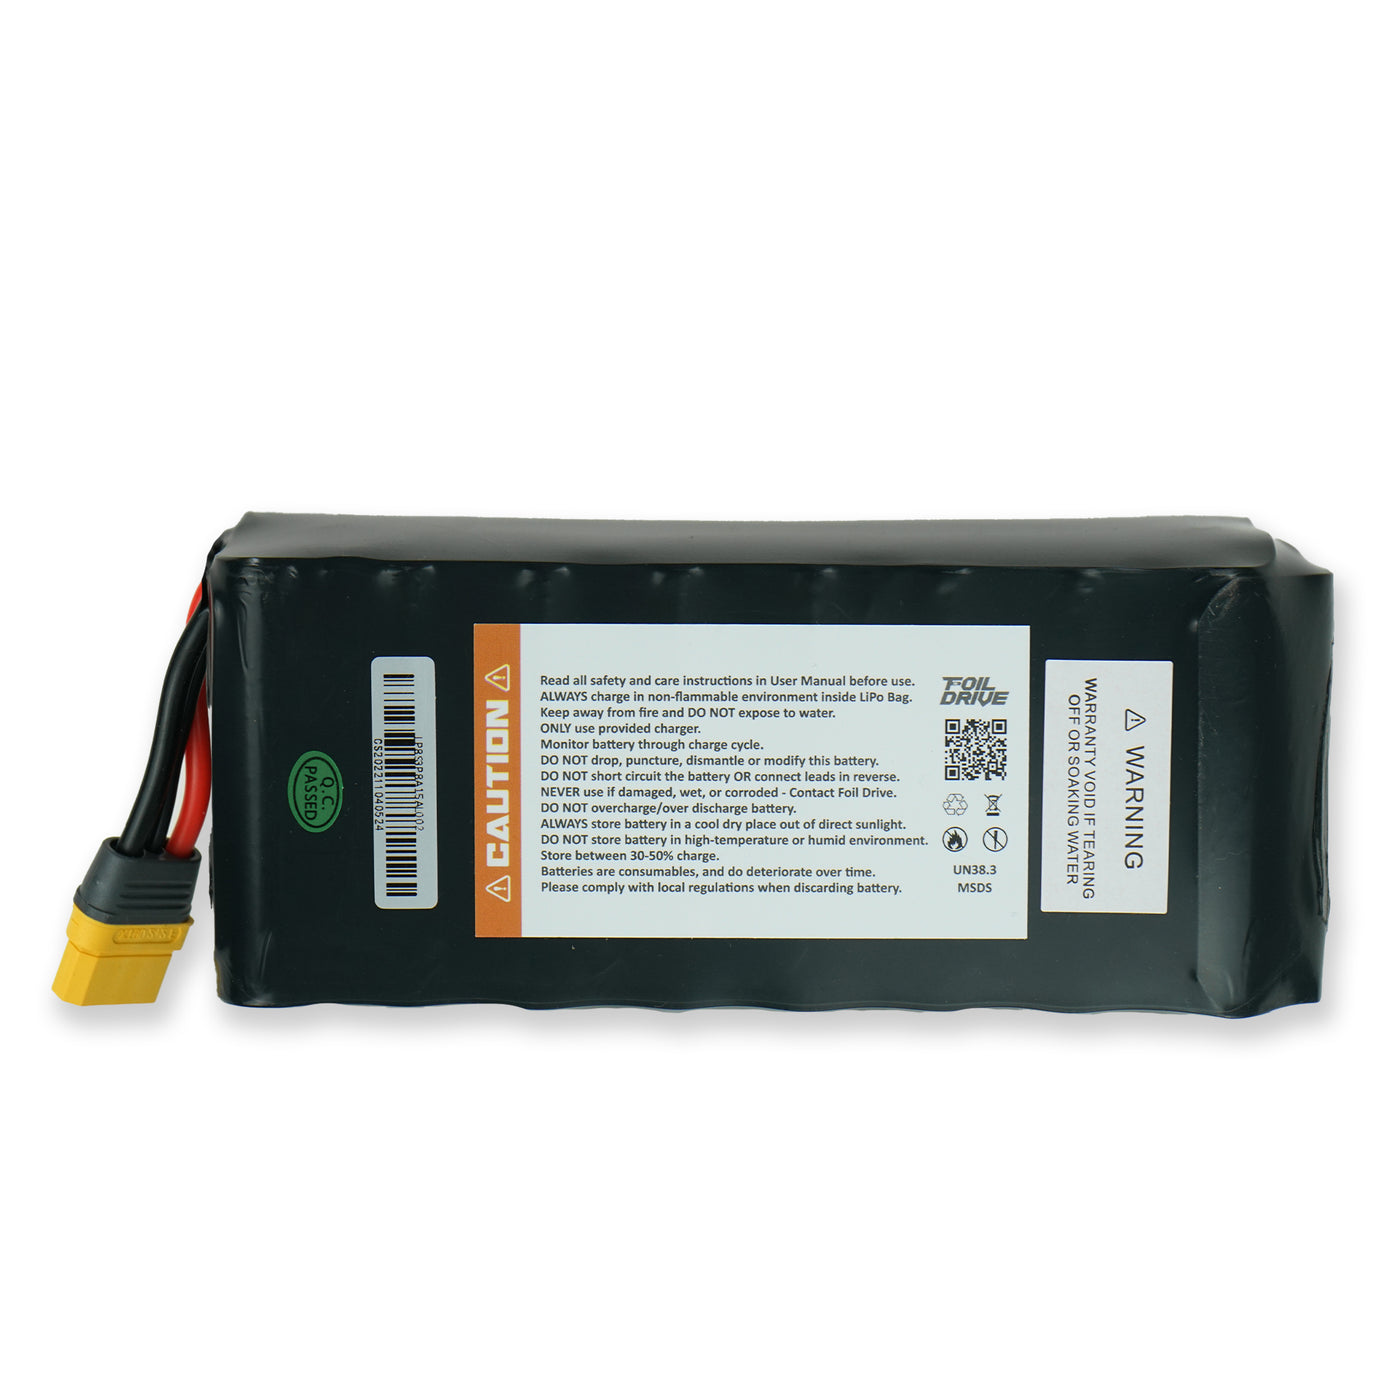     Foil-Drive-Assist-PLUS-V2-Standard-Battery-S22-2